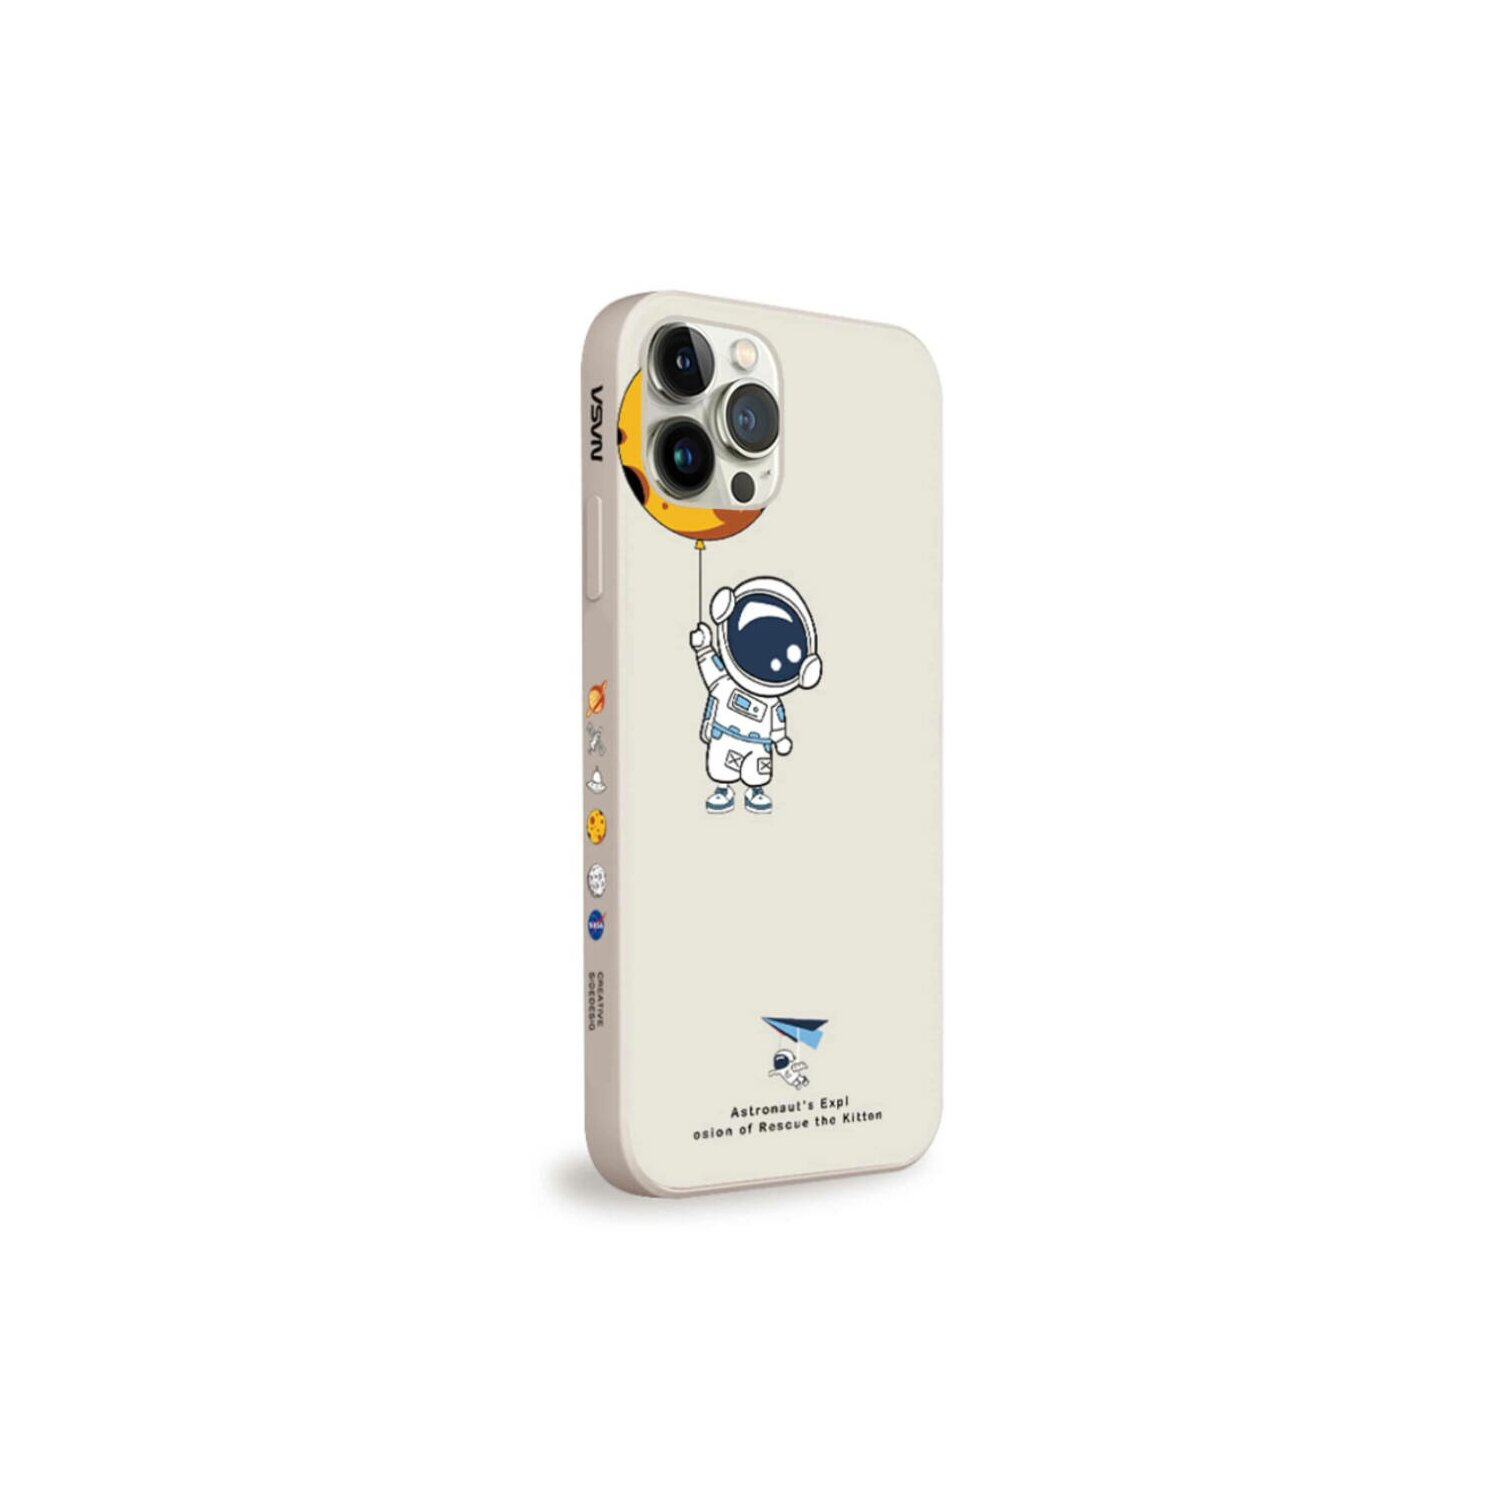 COFI Astronaut Nasa Creme Apple, Pro, 14 iPhone Hülle, Backcover